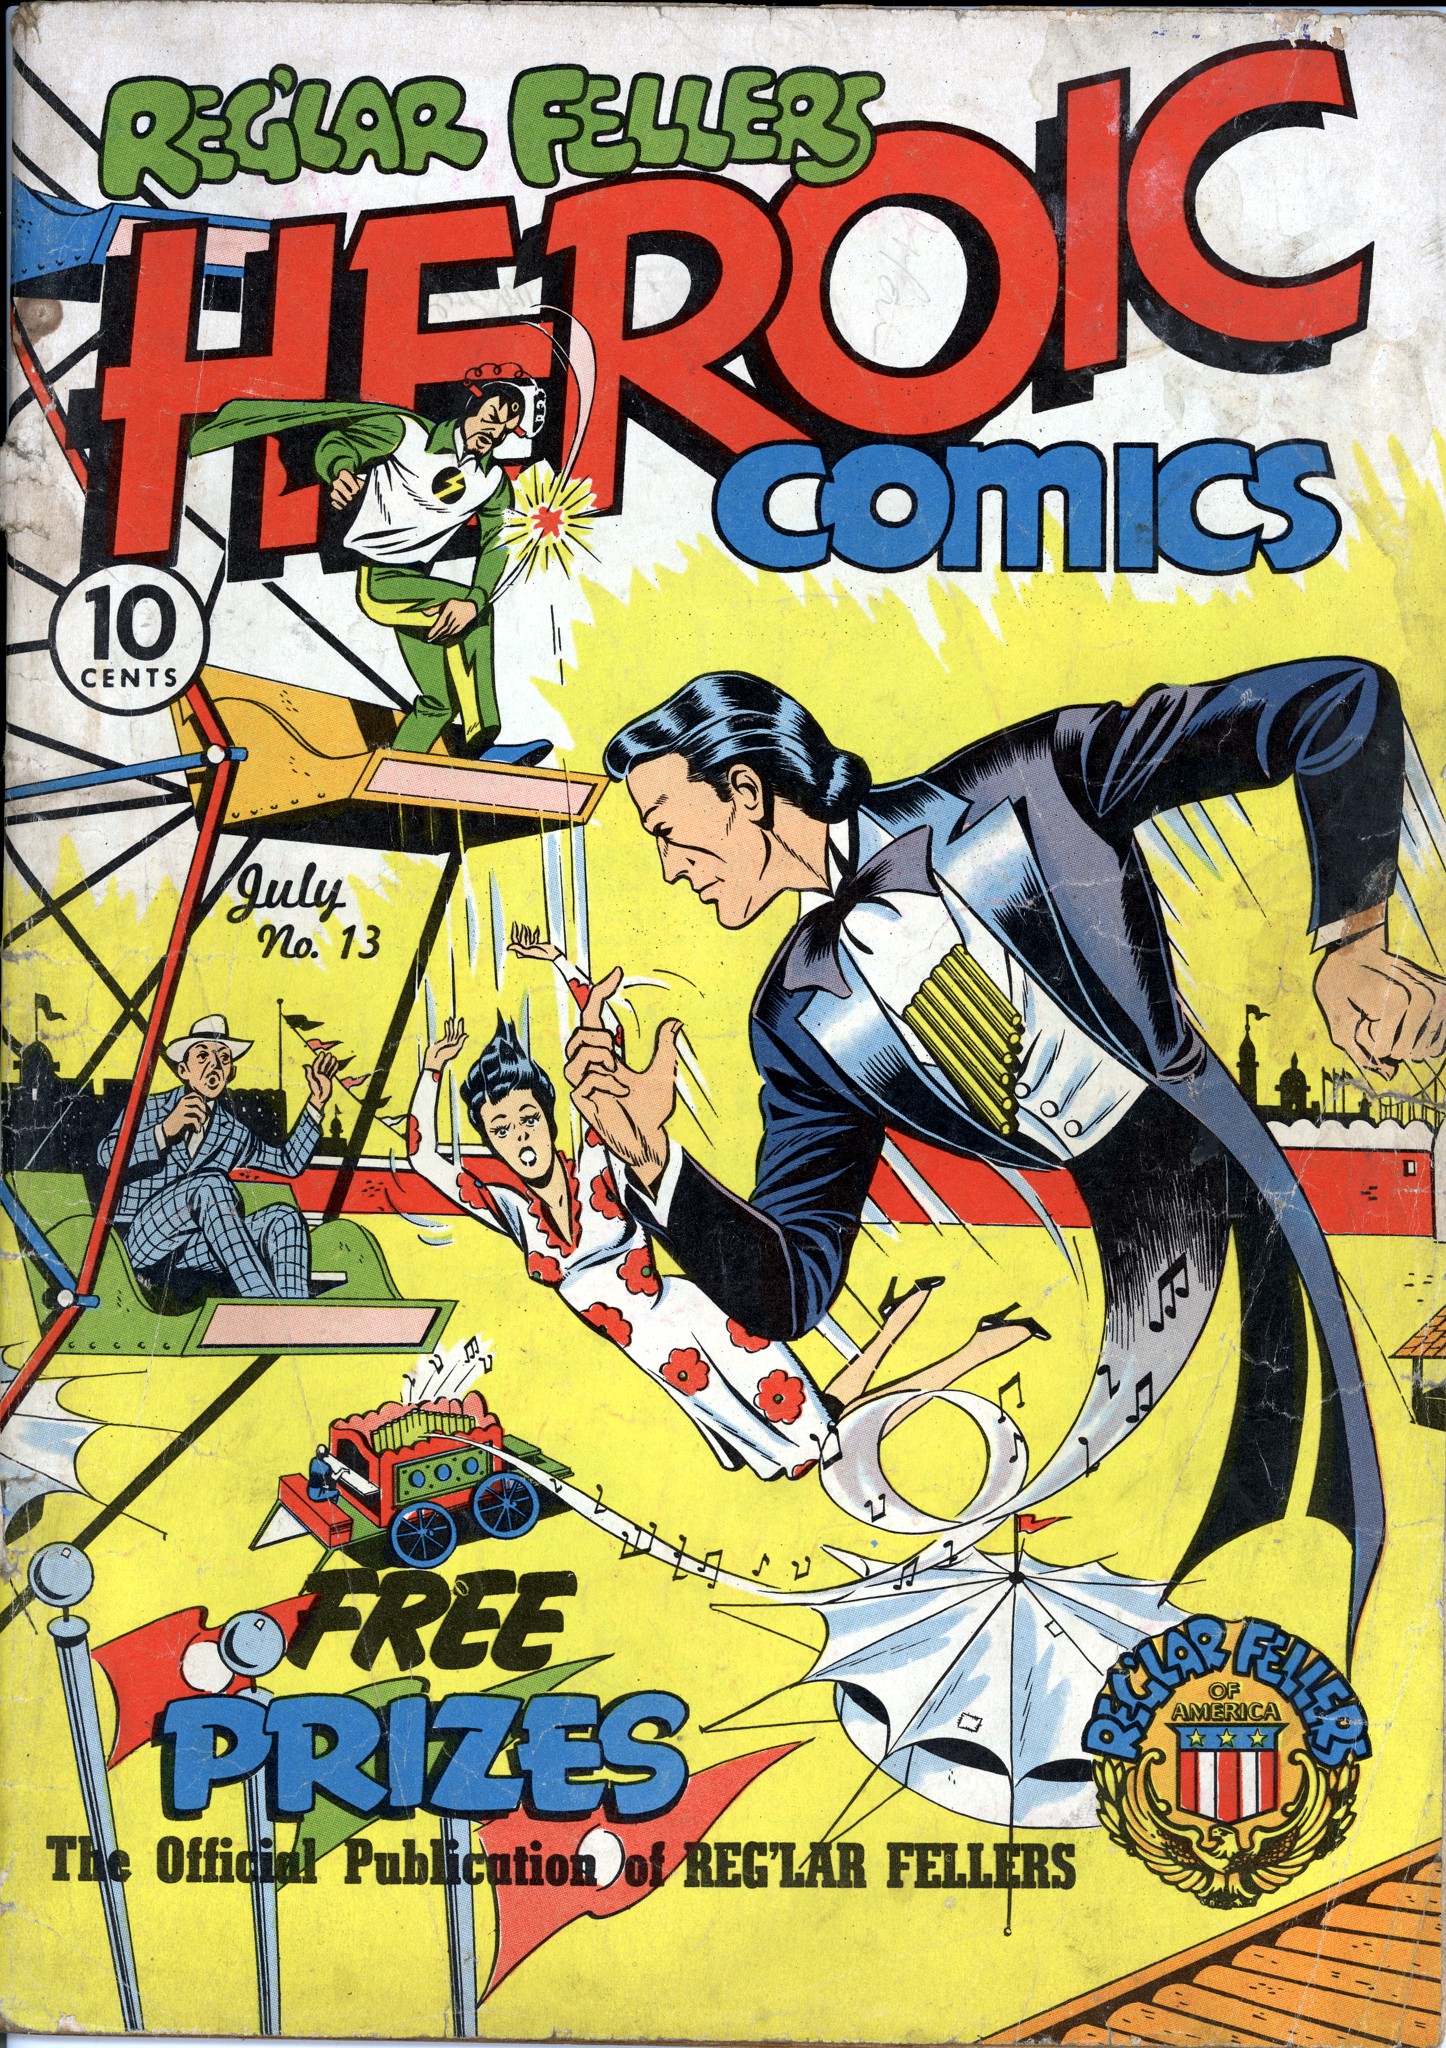 Reg'lar Fellers Heroic Comics issue 13 - Page 1